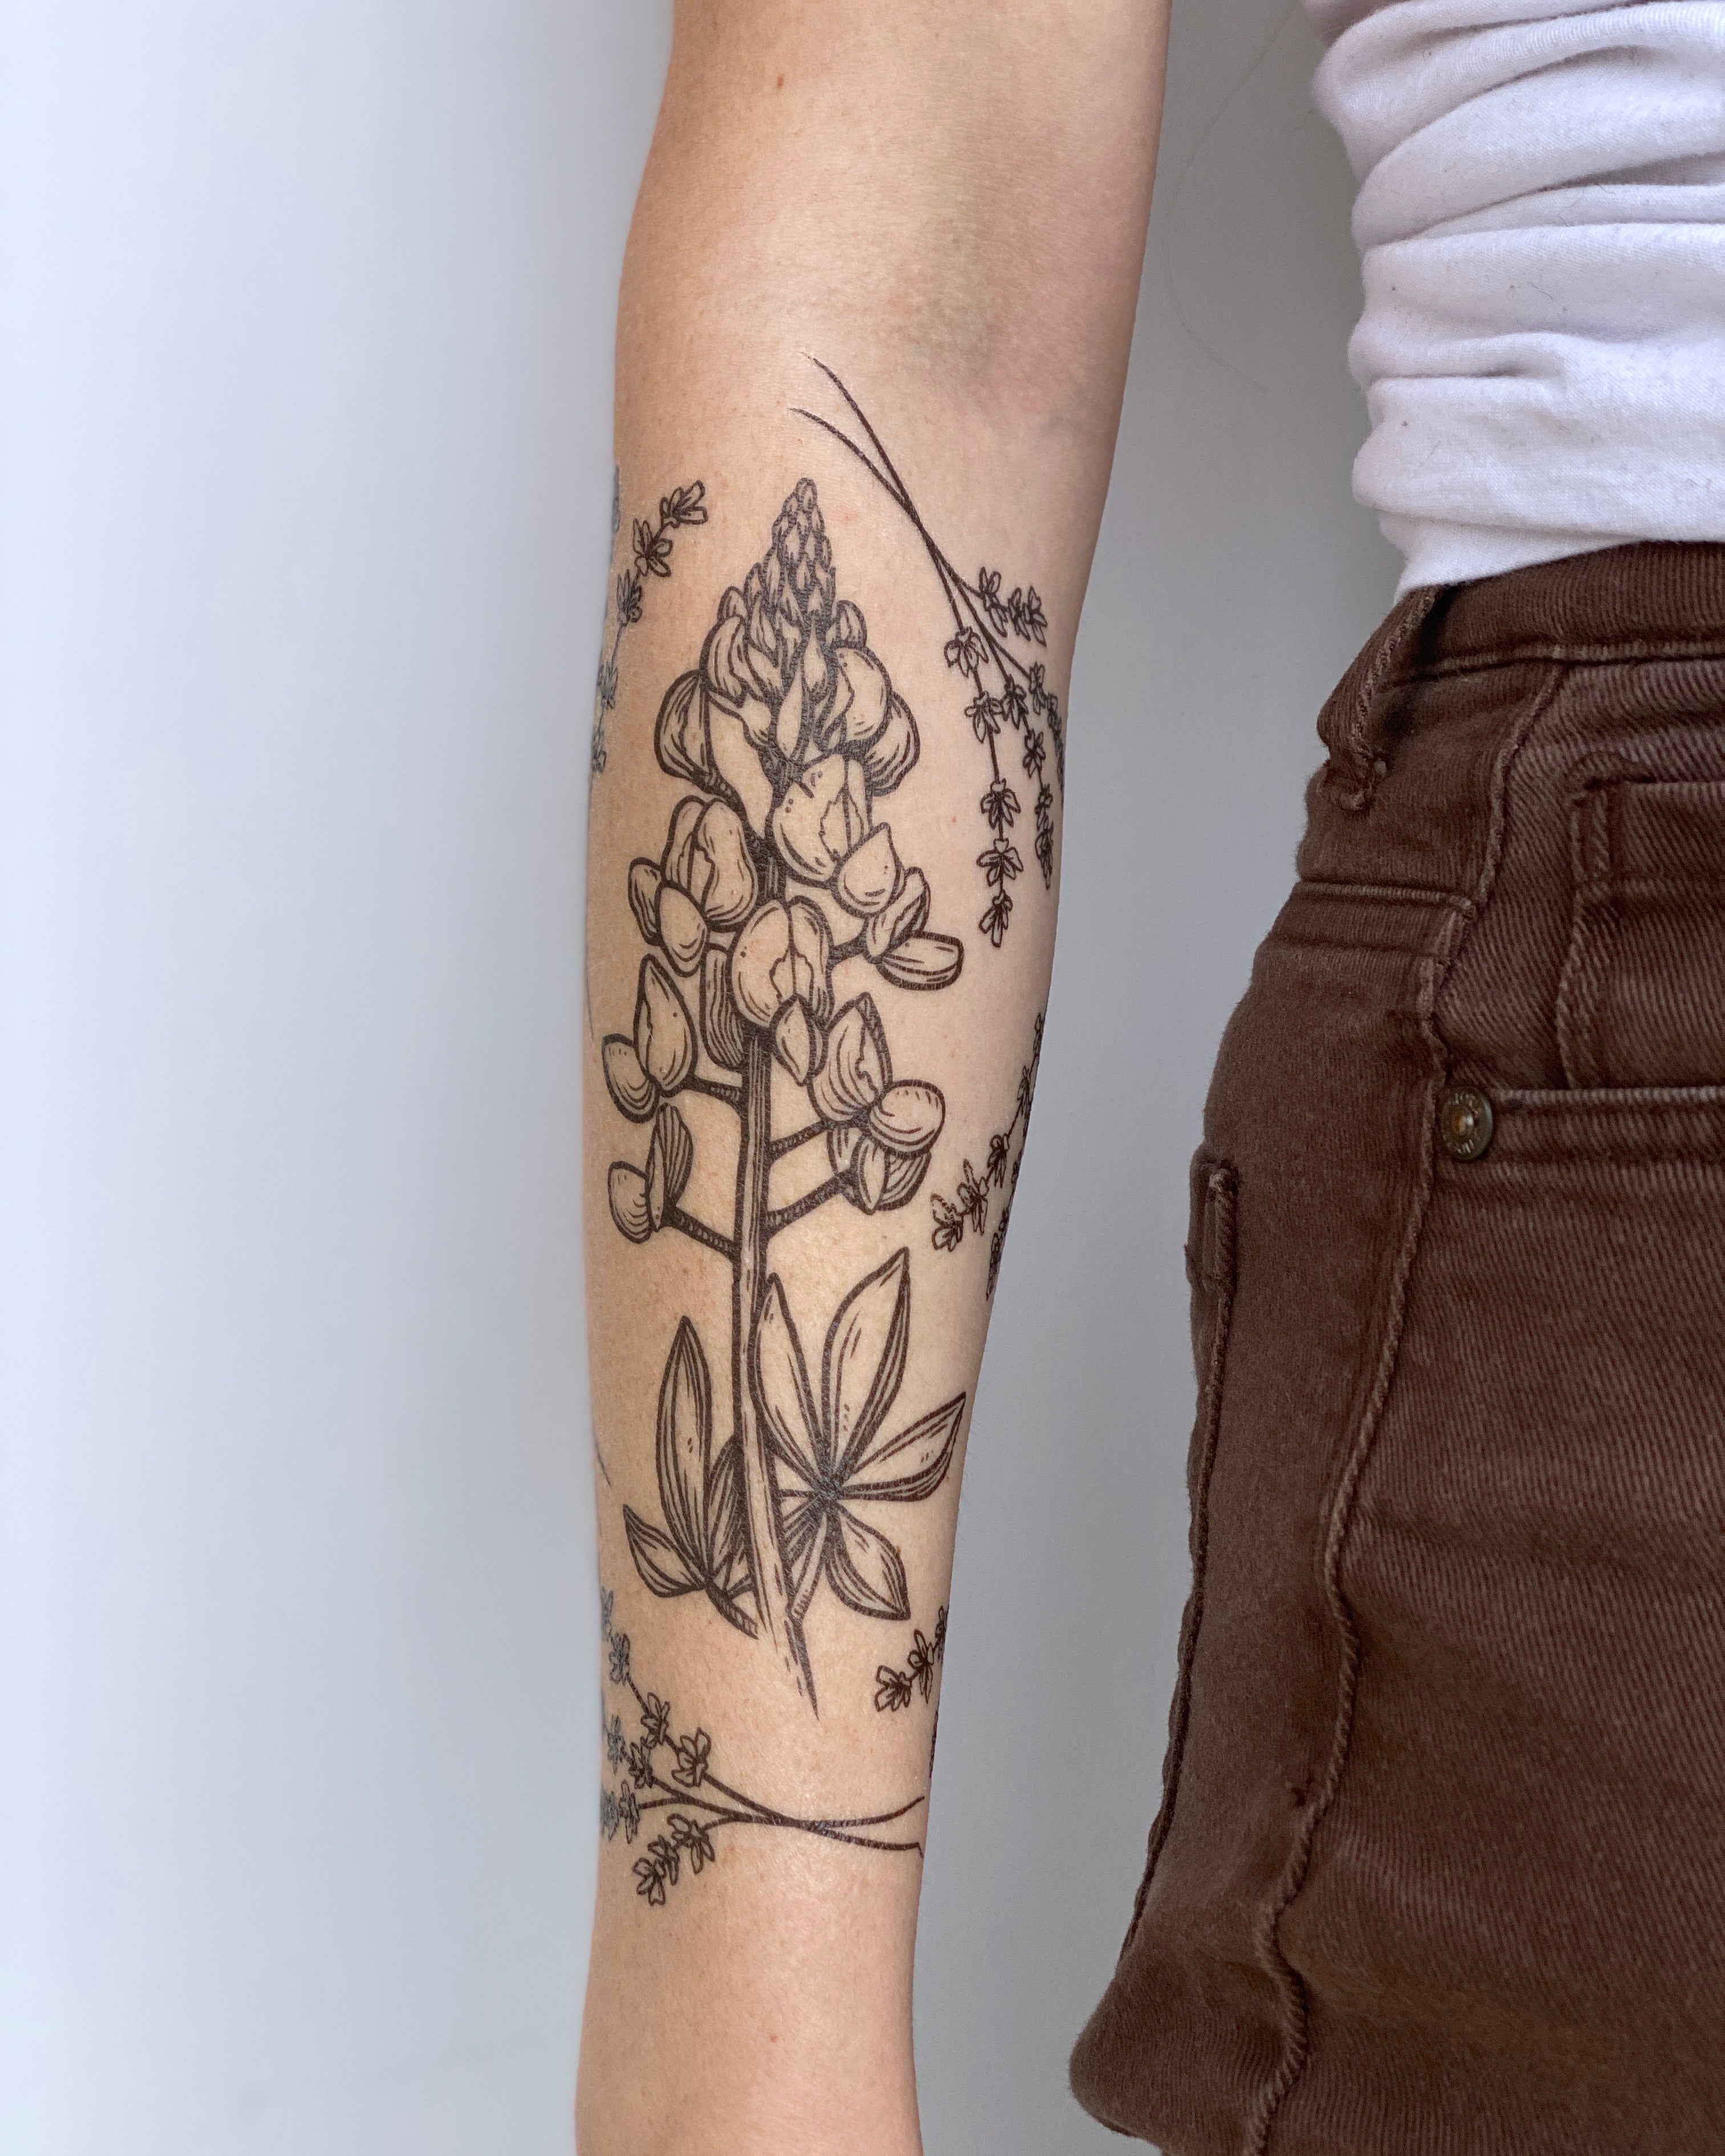 Flower Tattoos  Texas wildflower tattoo with bluebonnets   Flickr